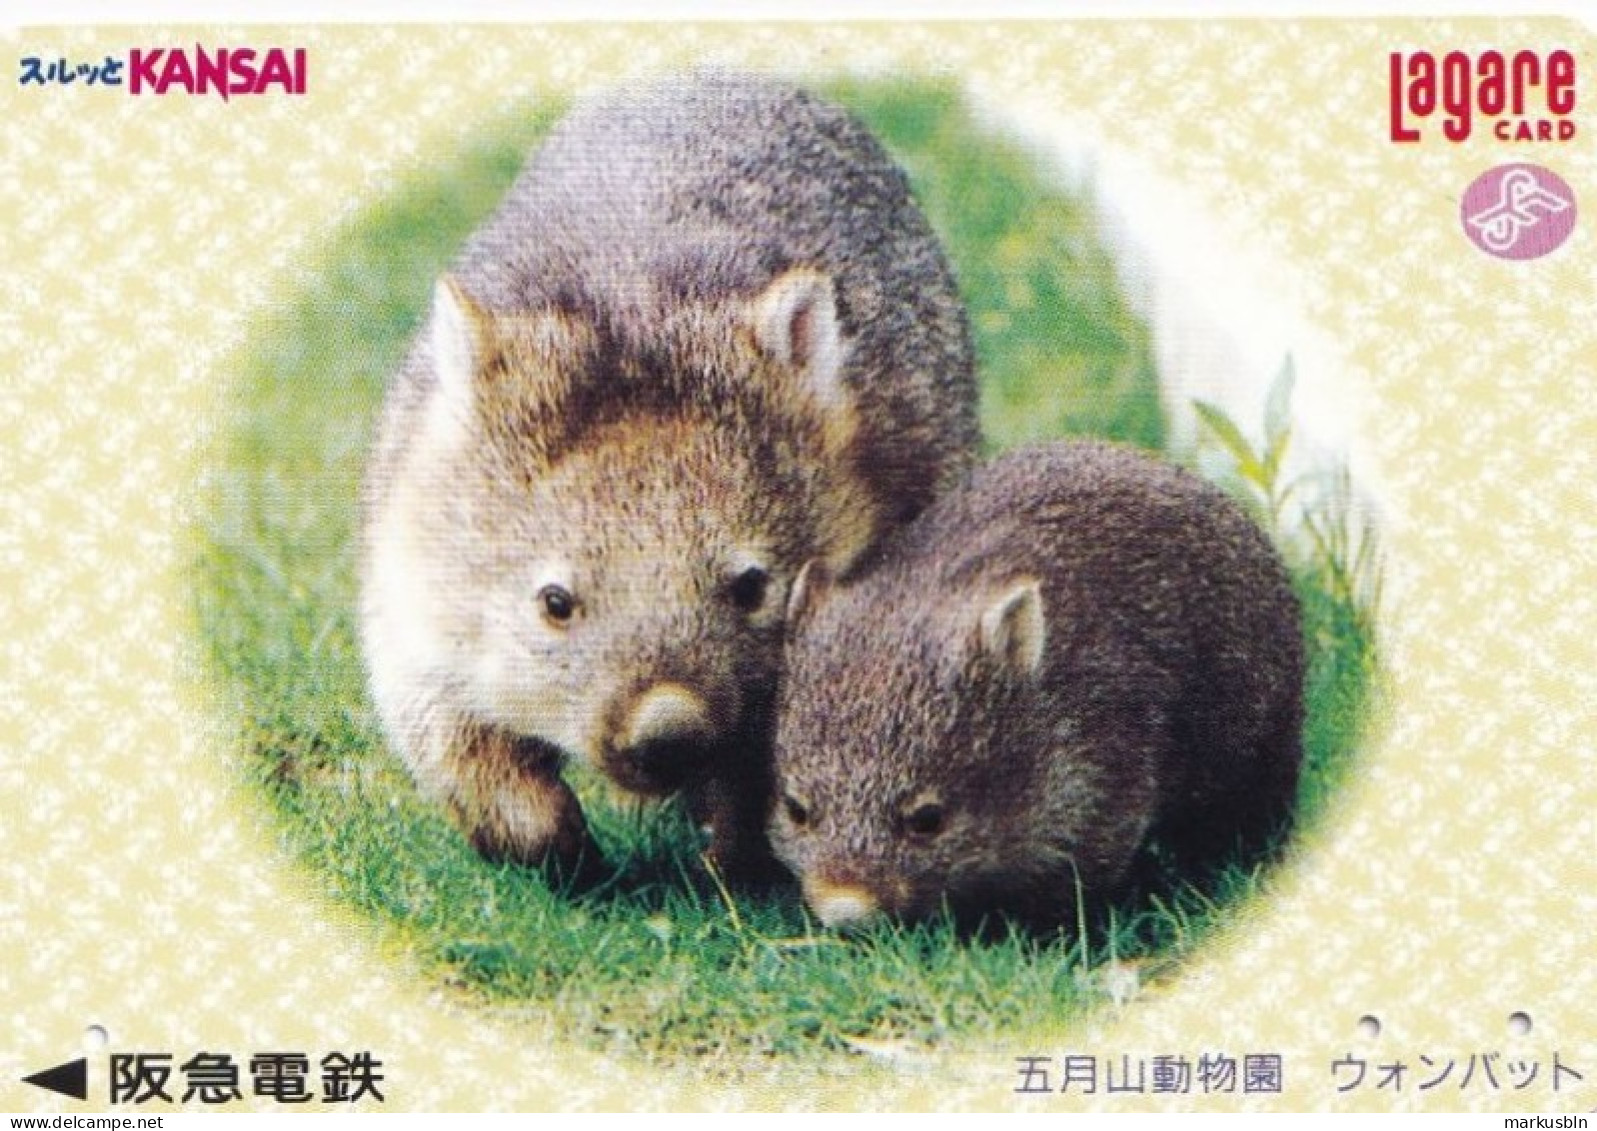 Japan Prepaid Lagare Card 1000 - Kansai Animals Wombat - Japan